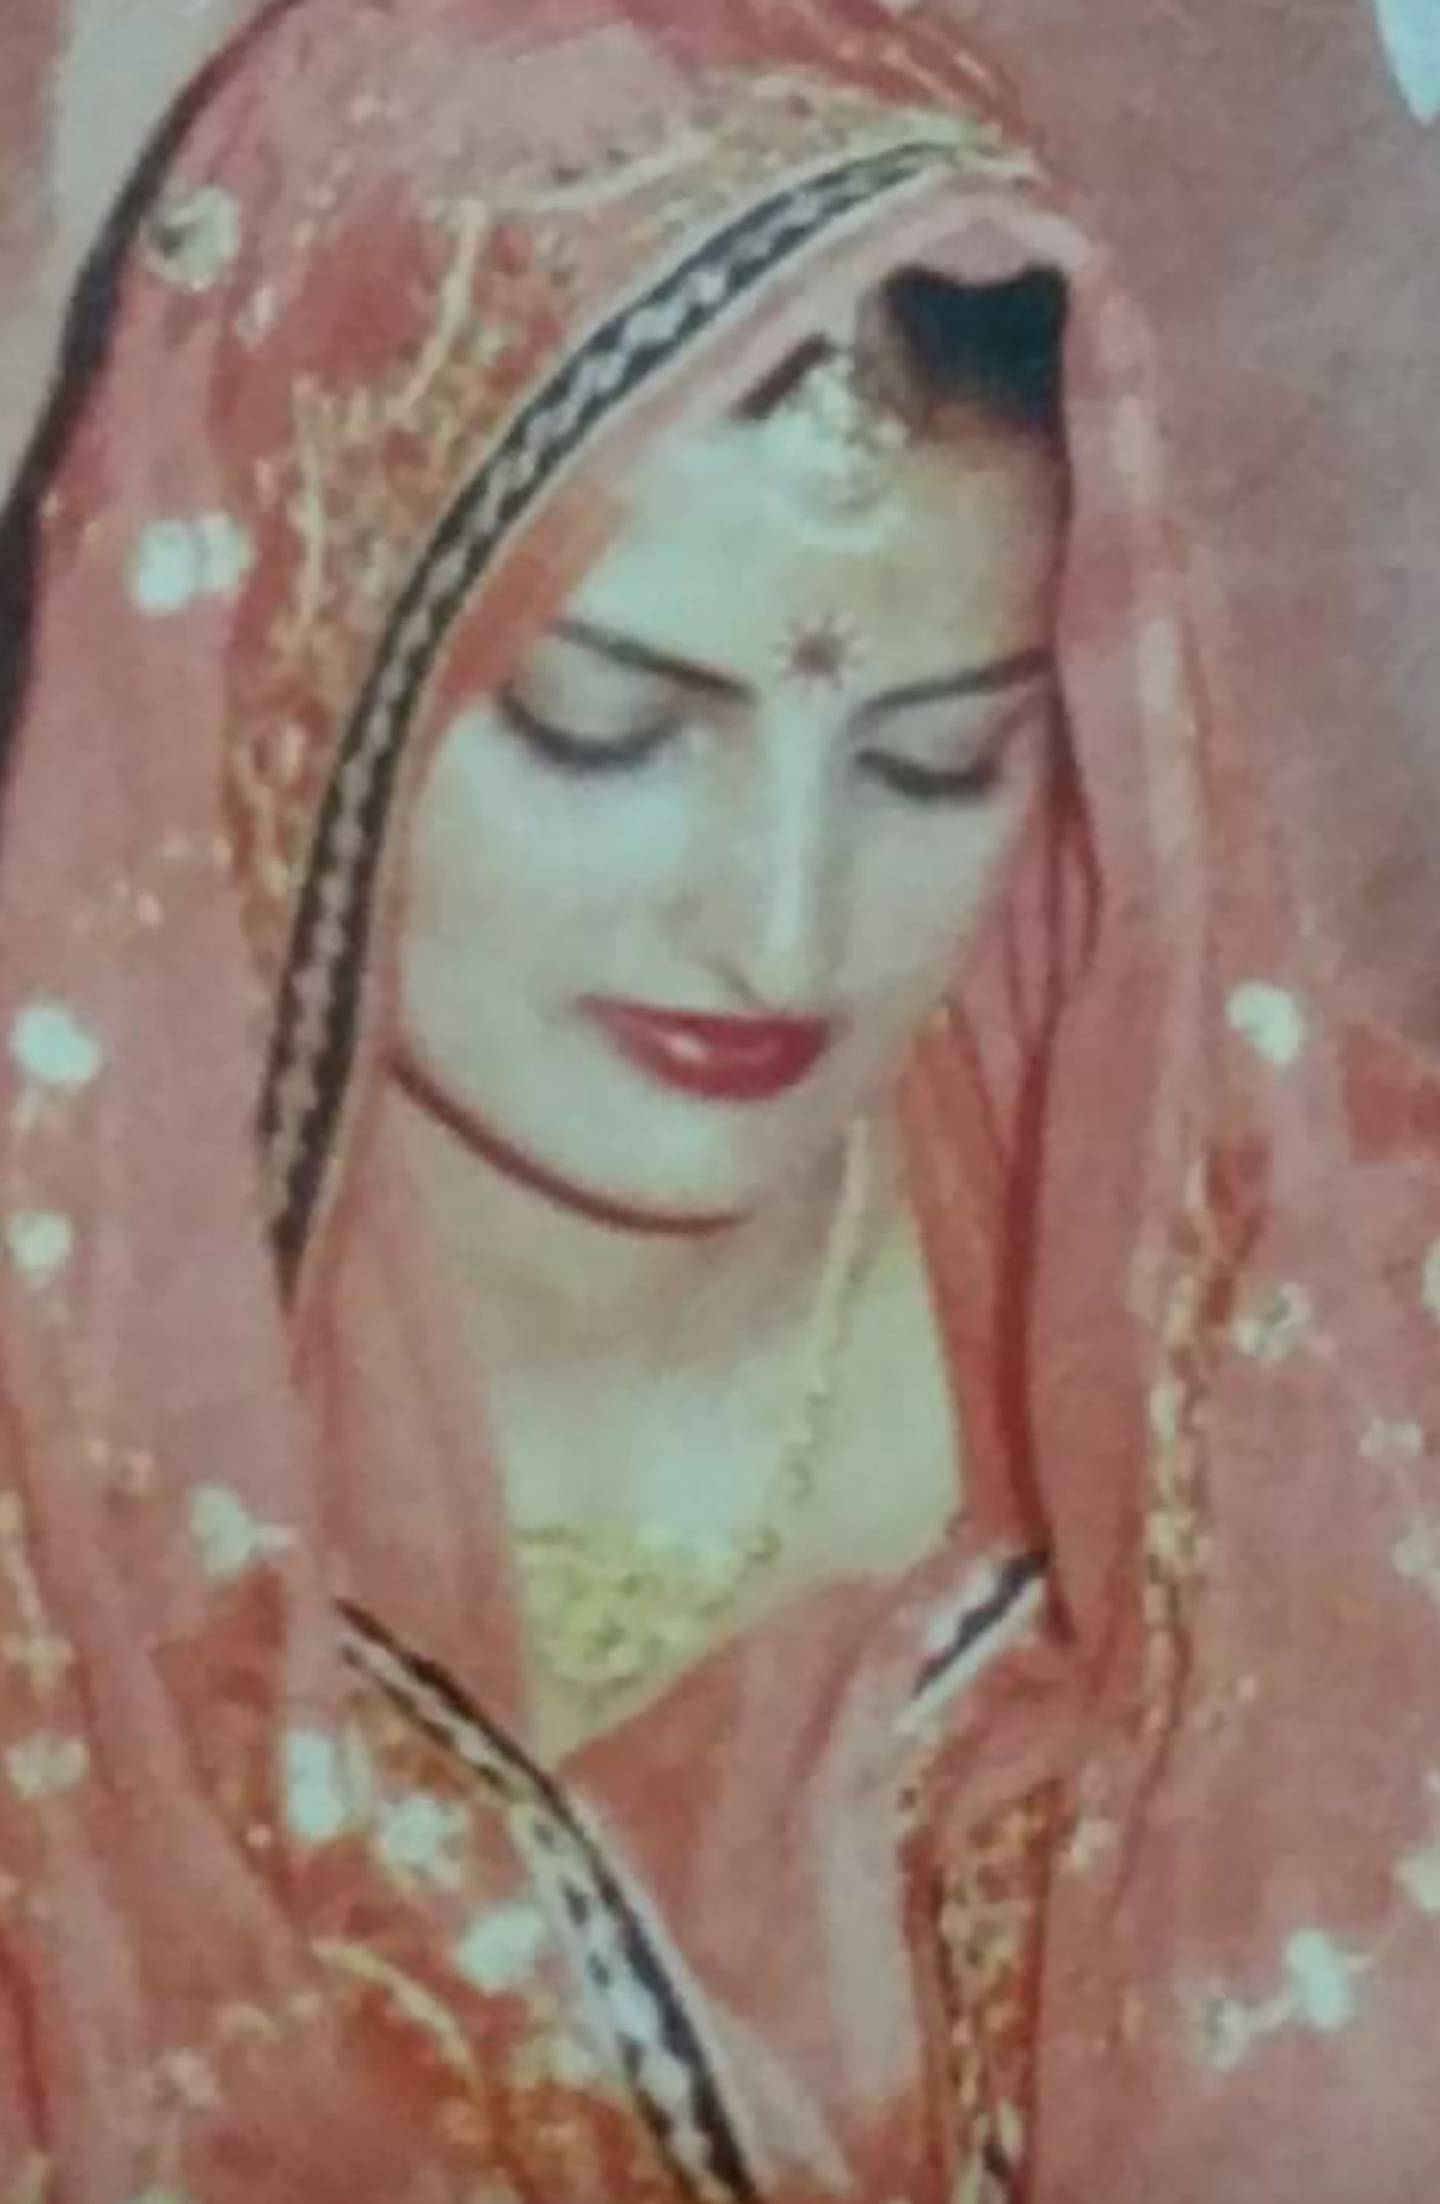 Mandeep Kaur on her wedding day in 1986.